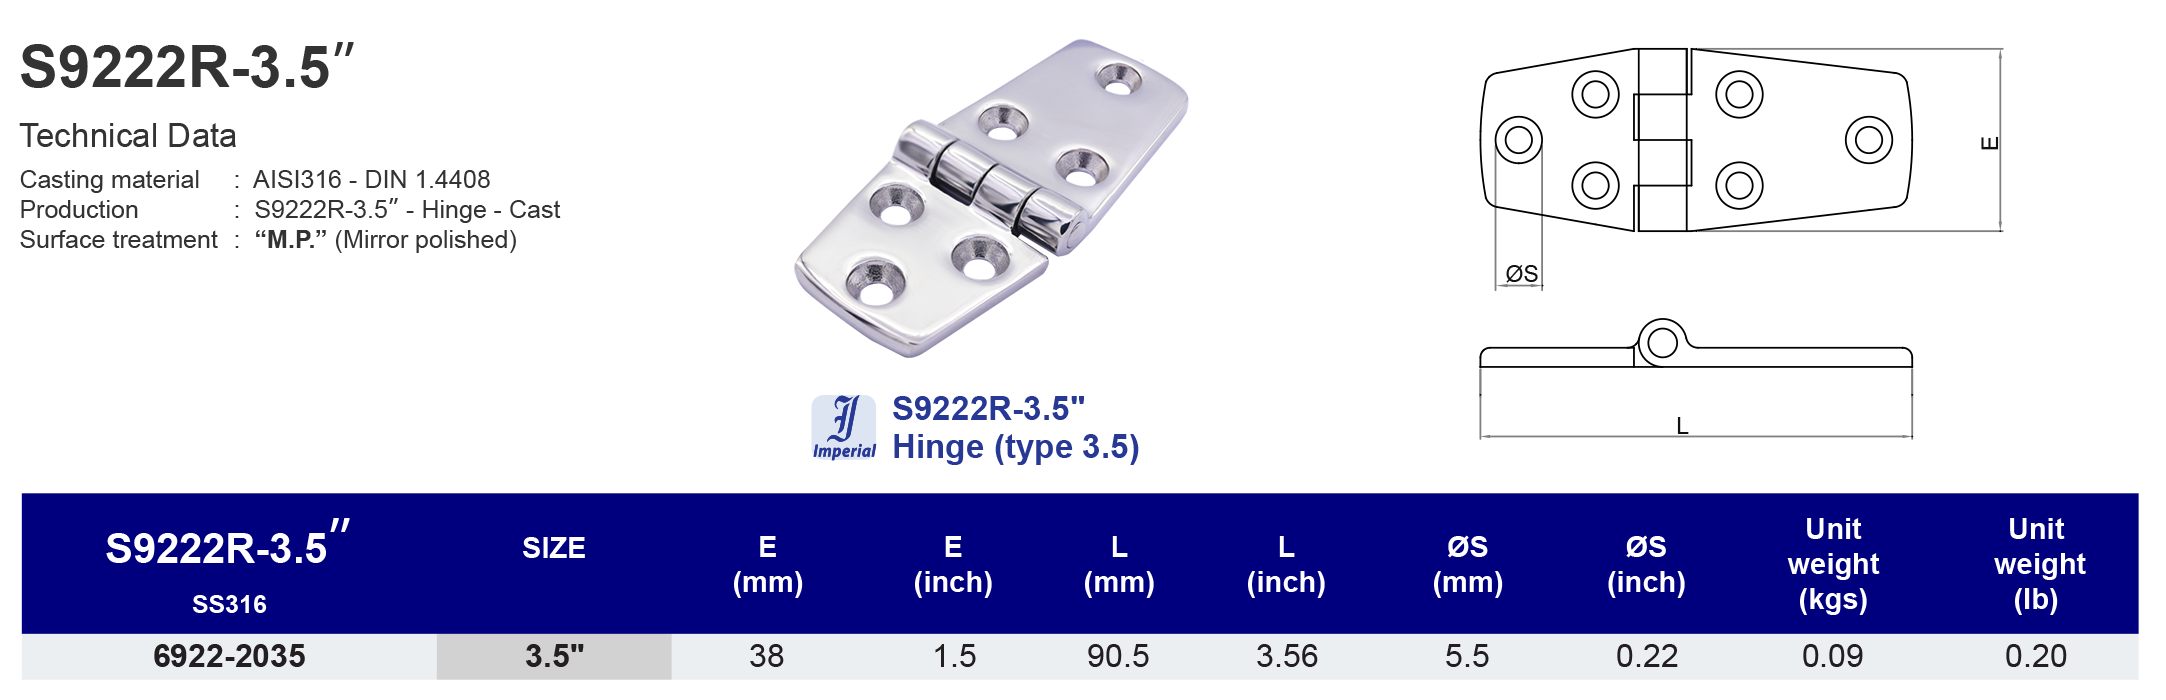 S9222R-3.5" Hinge (type 3.5) - 316